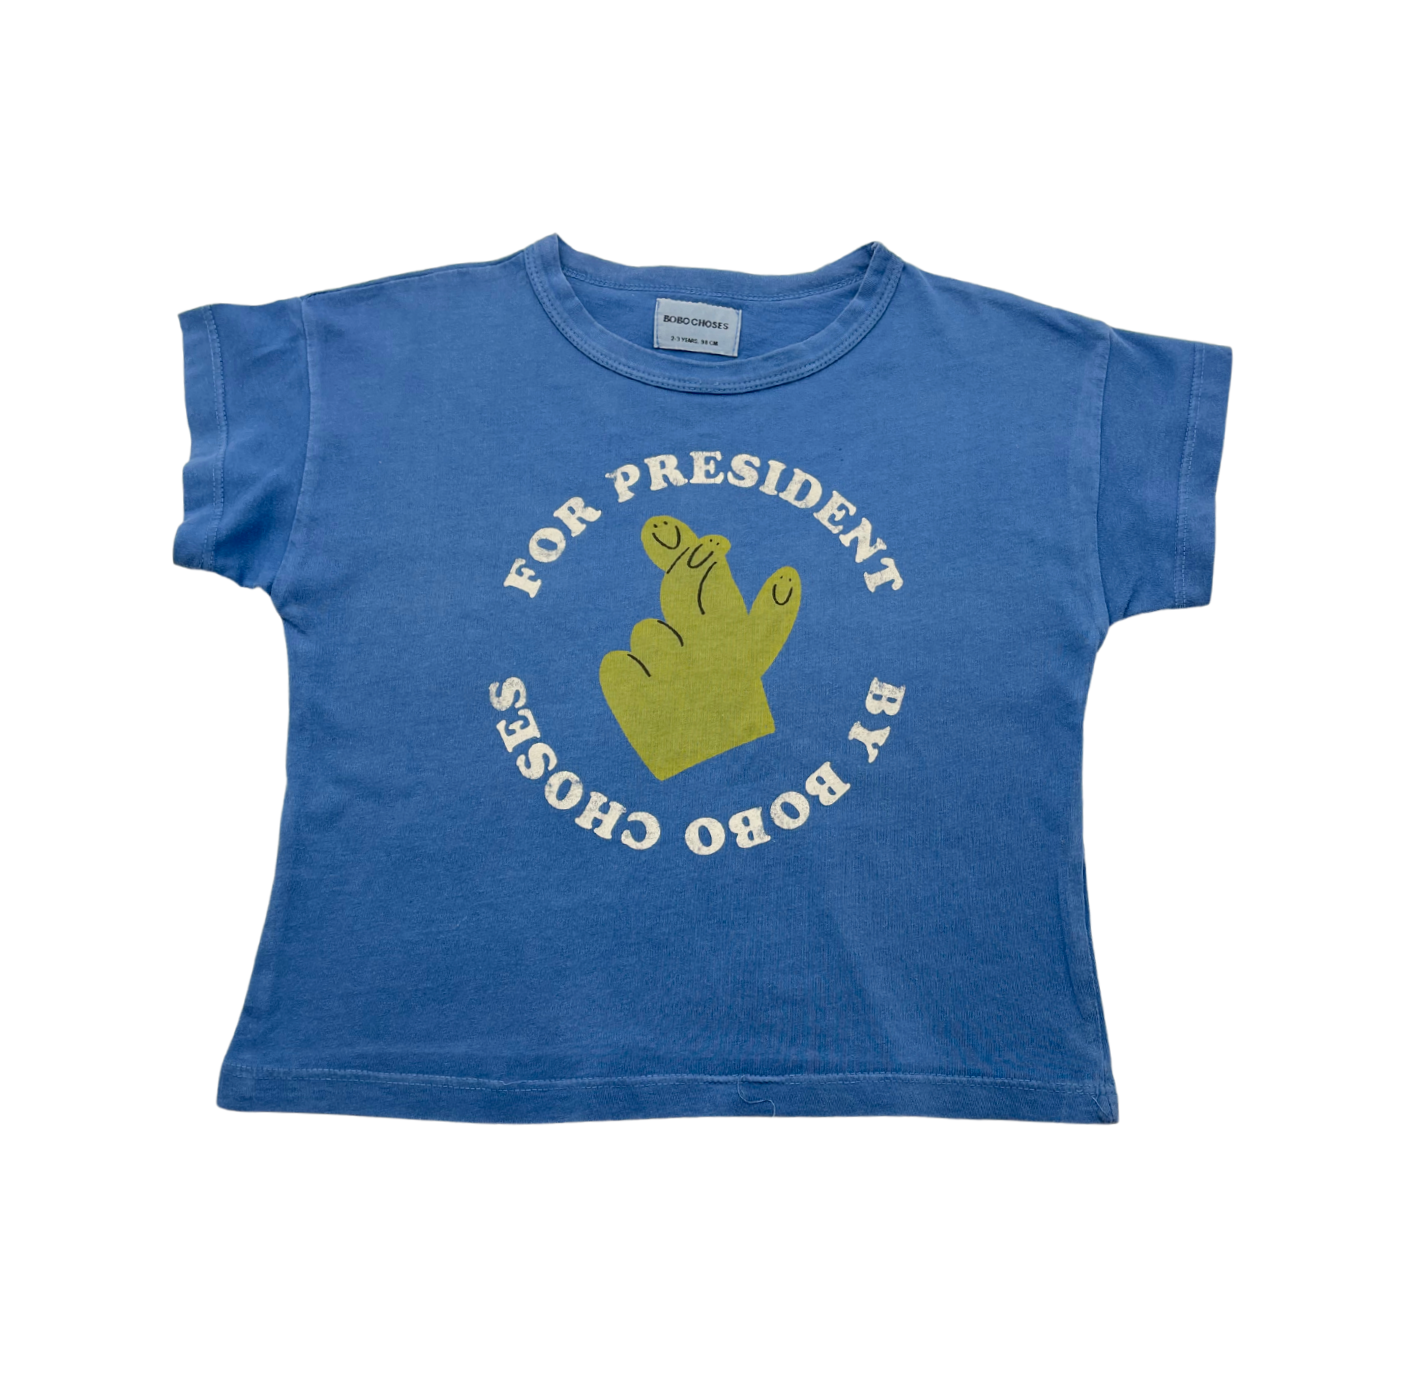 BOBO CHOSES - "President" T-shirt - 2/3 years